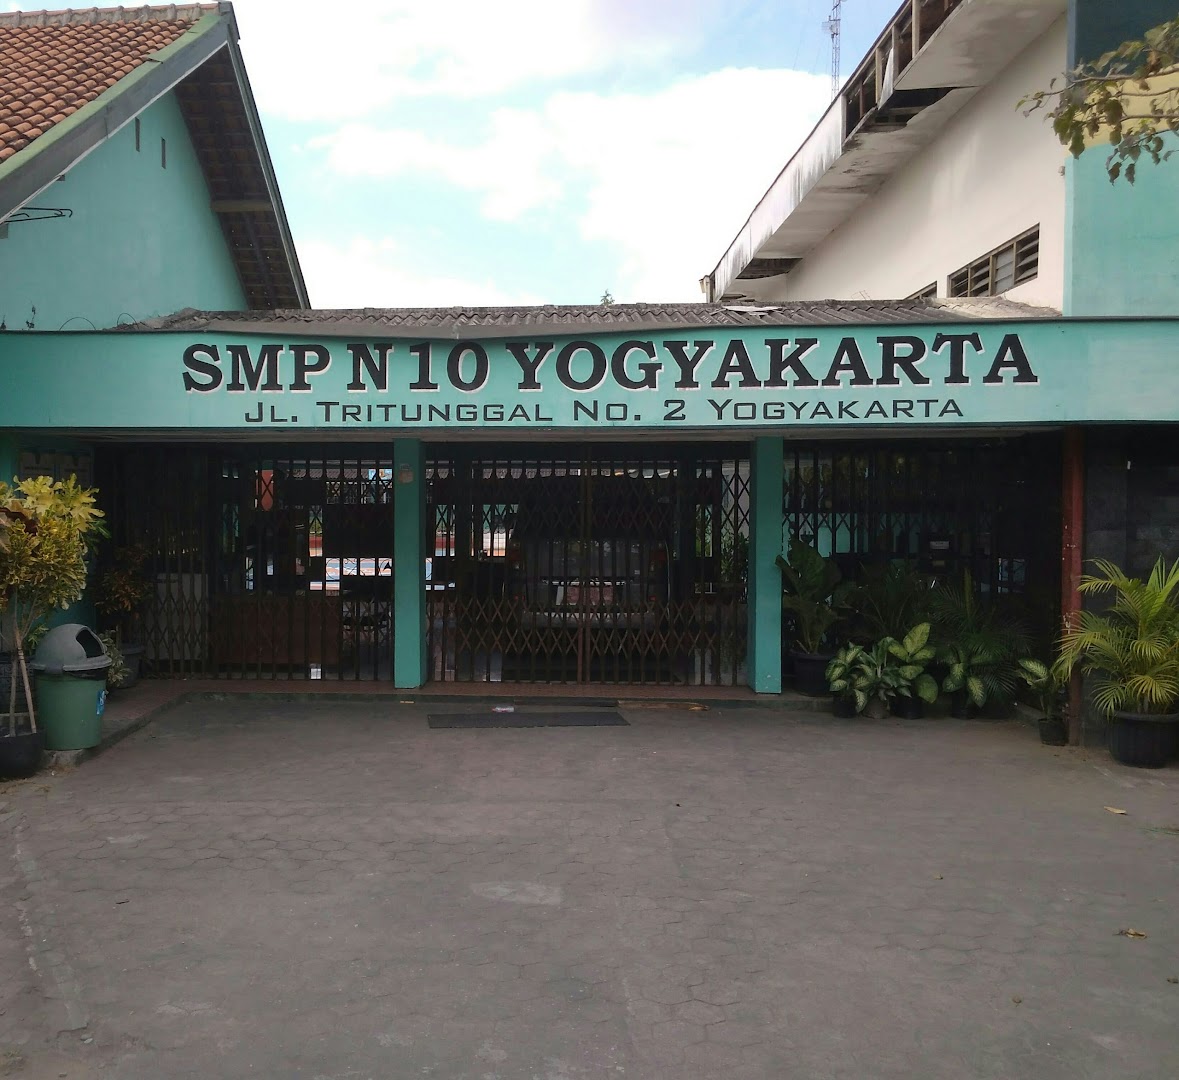 Smp Negeri 10 Yogyakarta Photo